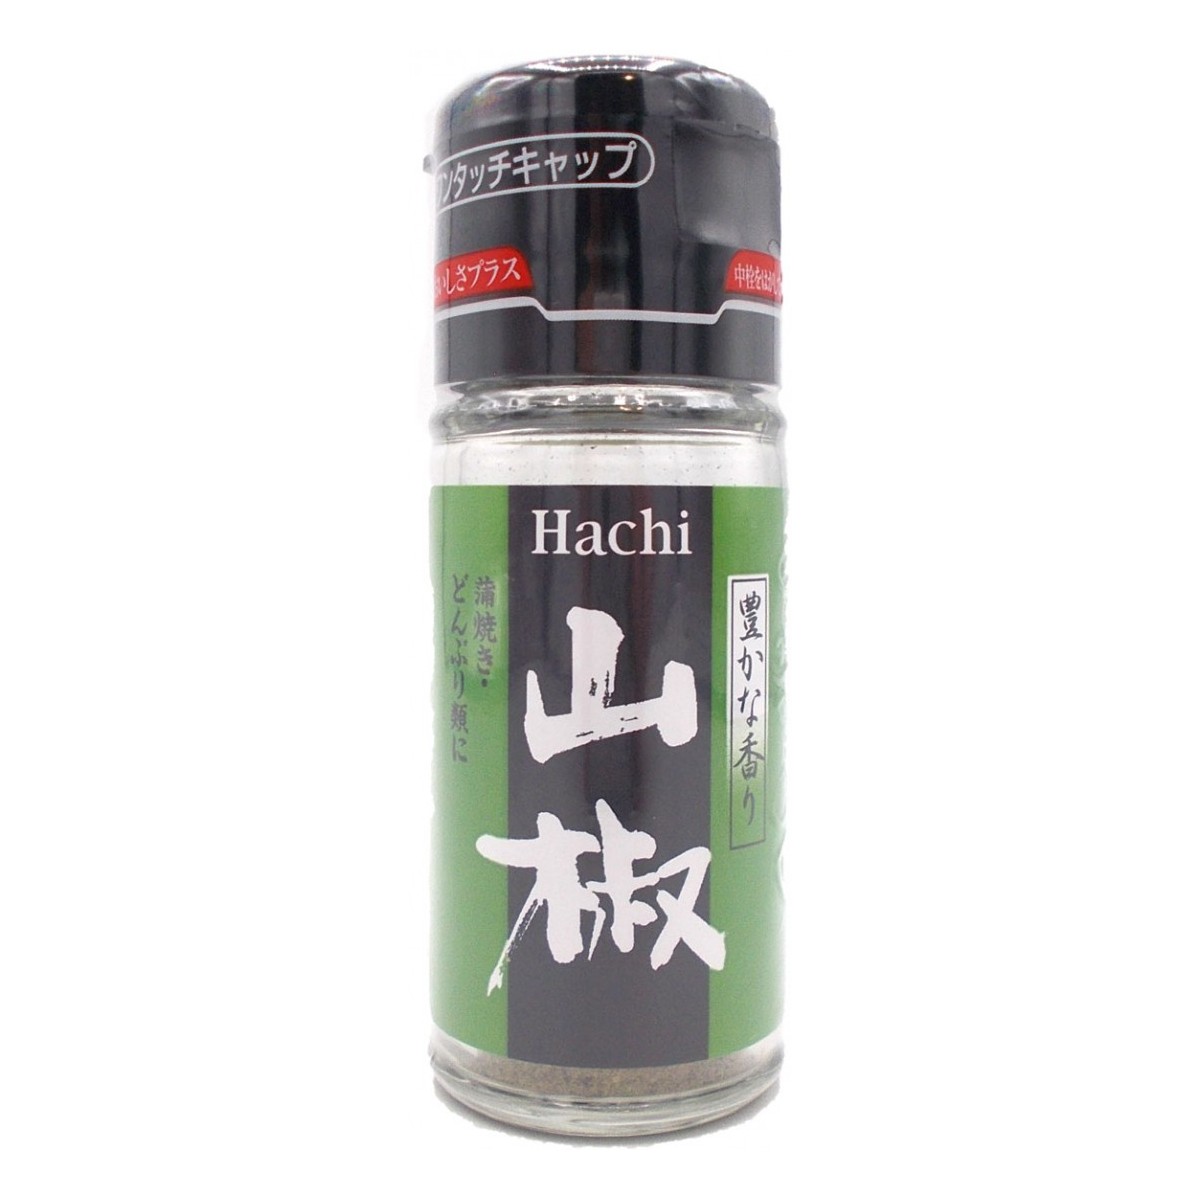 Hachi Sansho